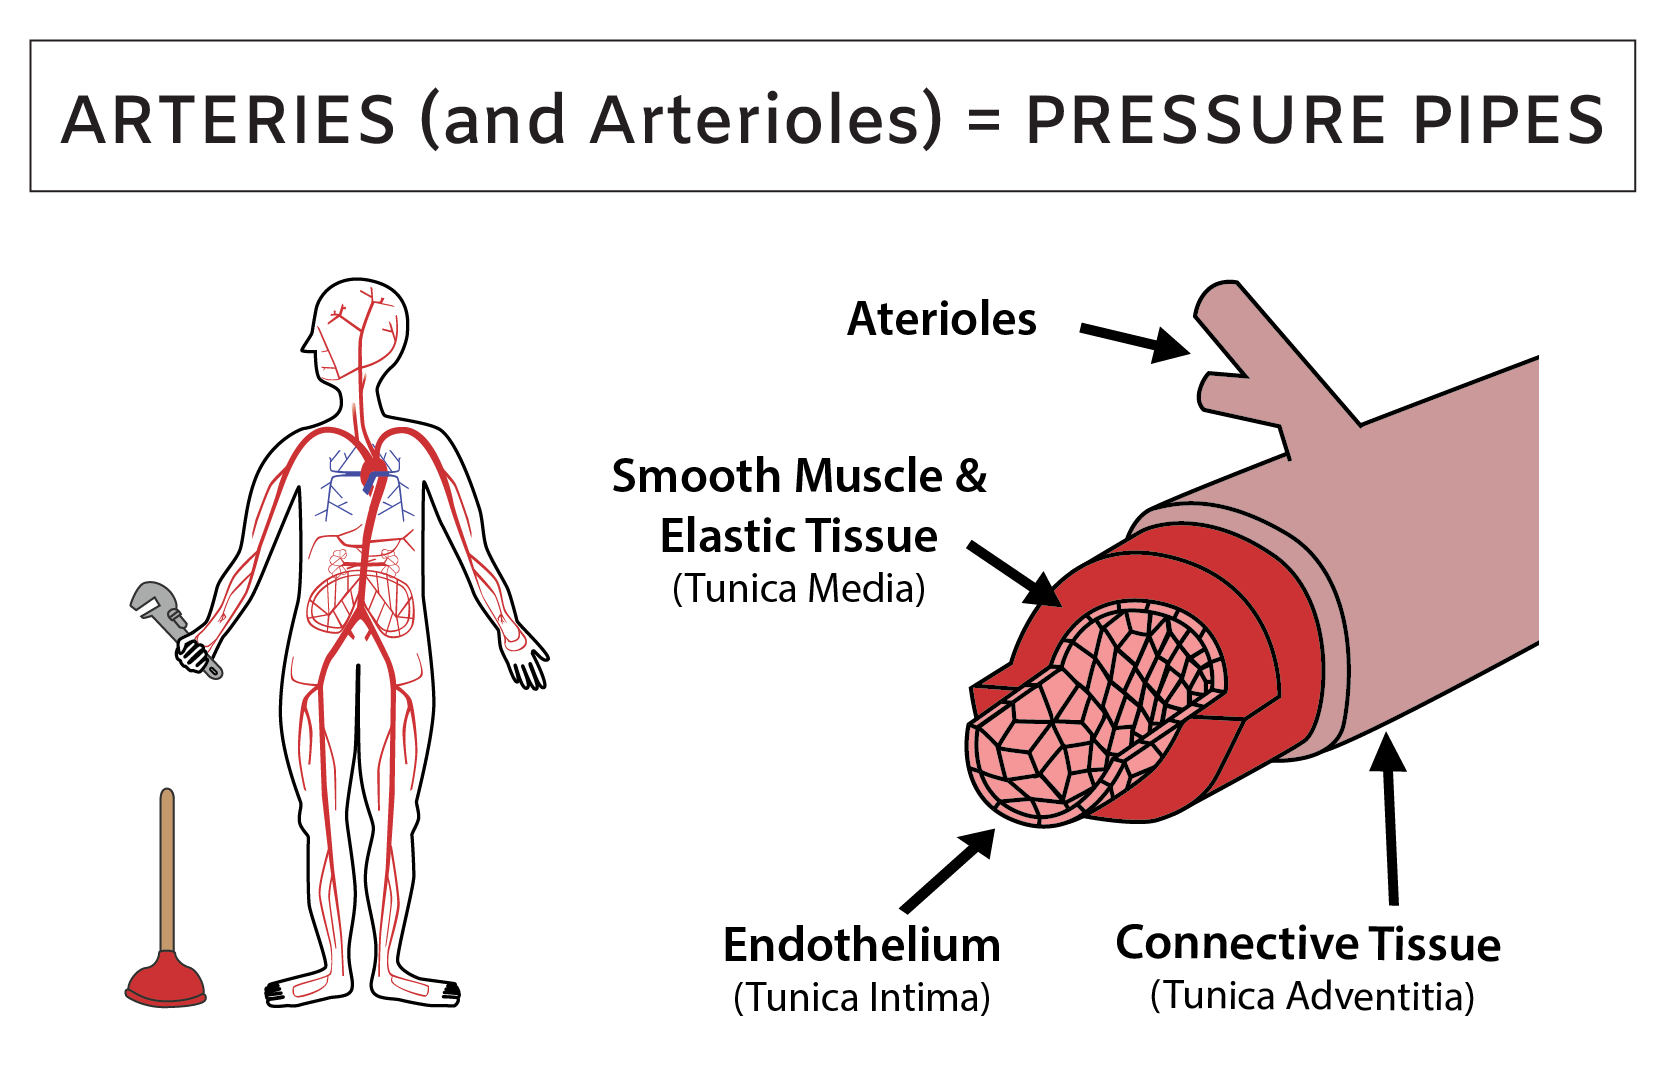 Human artery anatomy and function summary illustration